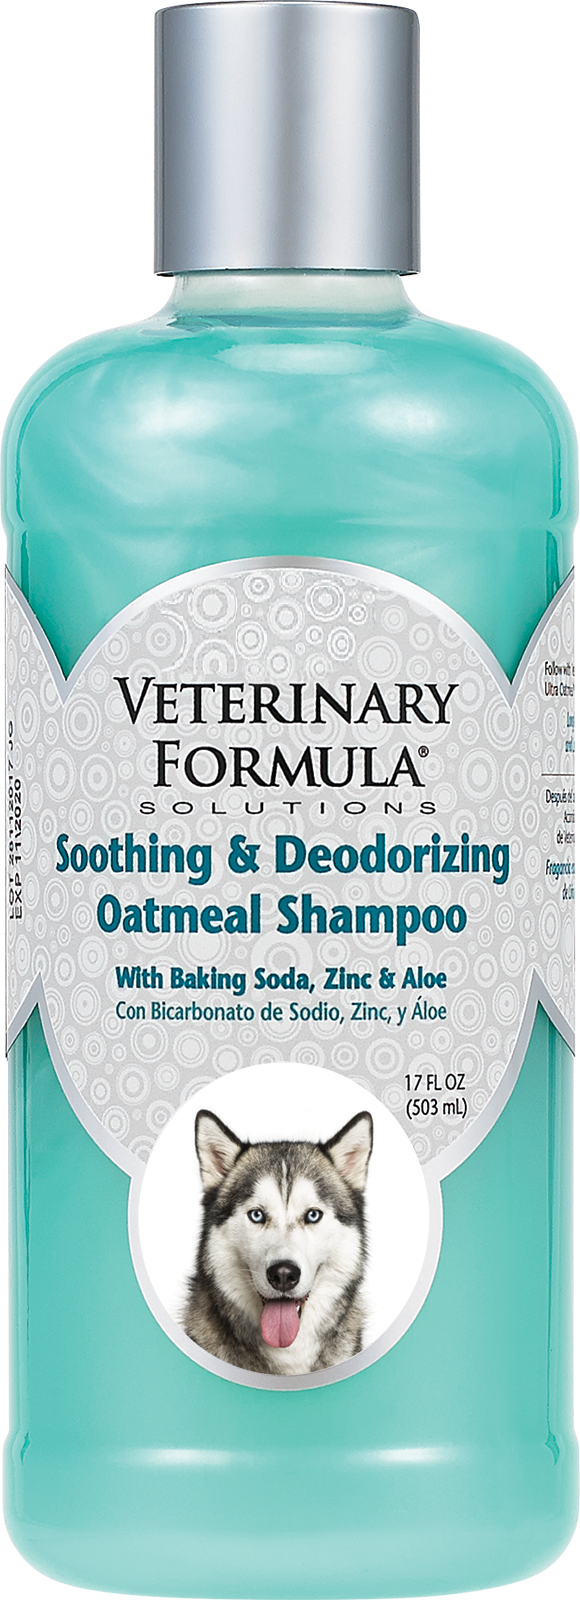 Soothing & Deodorizing Oatmeal Shampoo